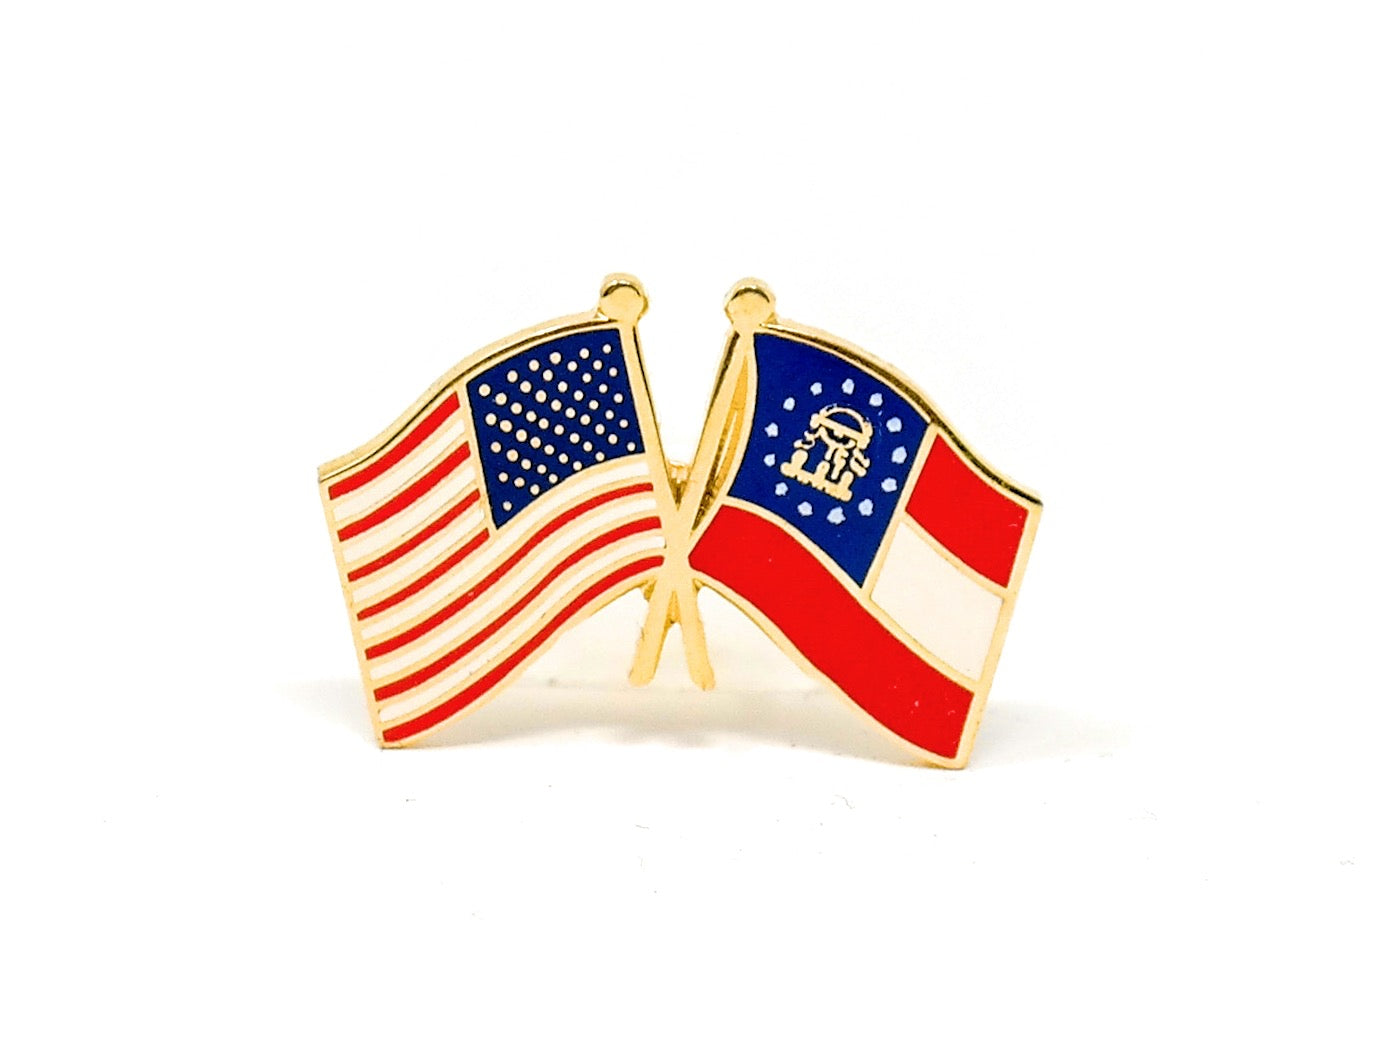 Georgia State & USA Friendship Flags Lapel Pin